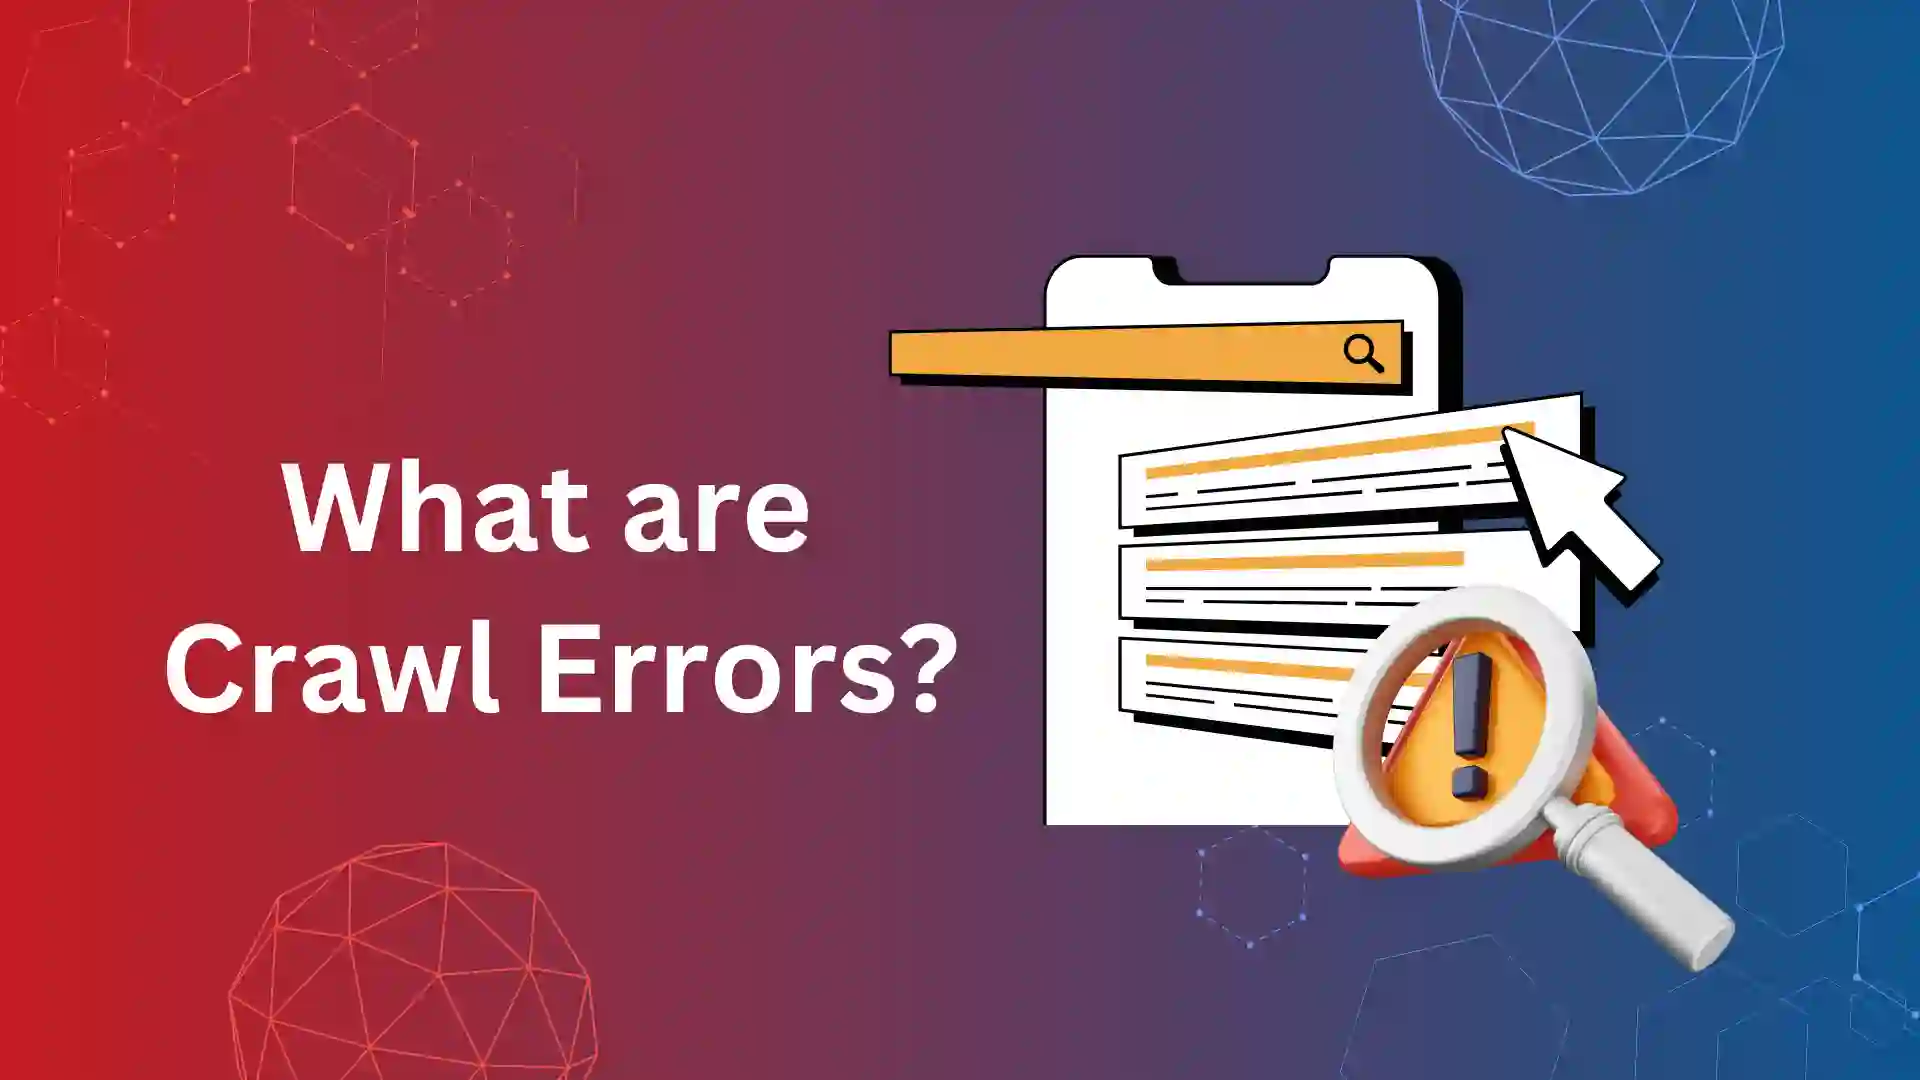 What are Crawl Errors?